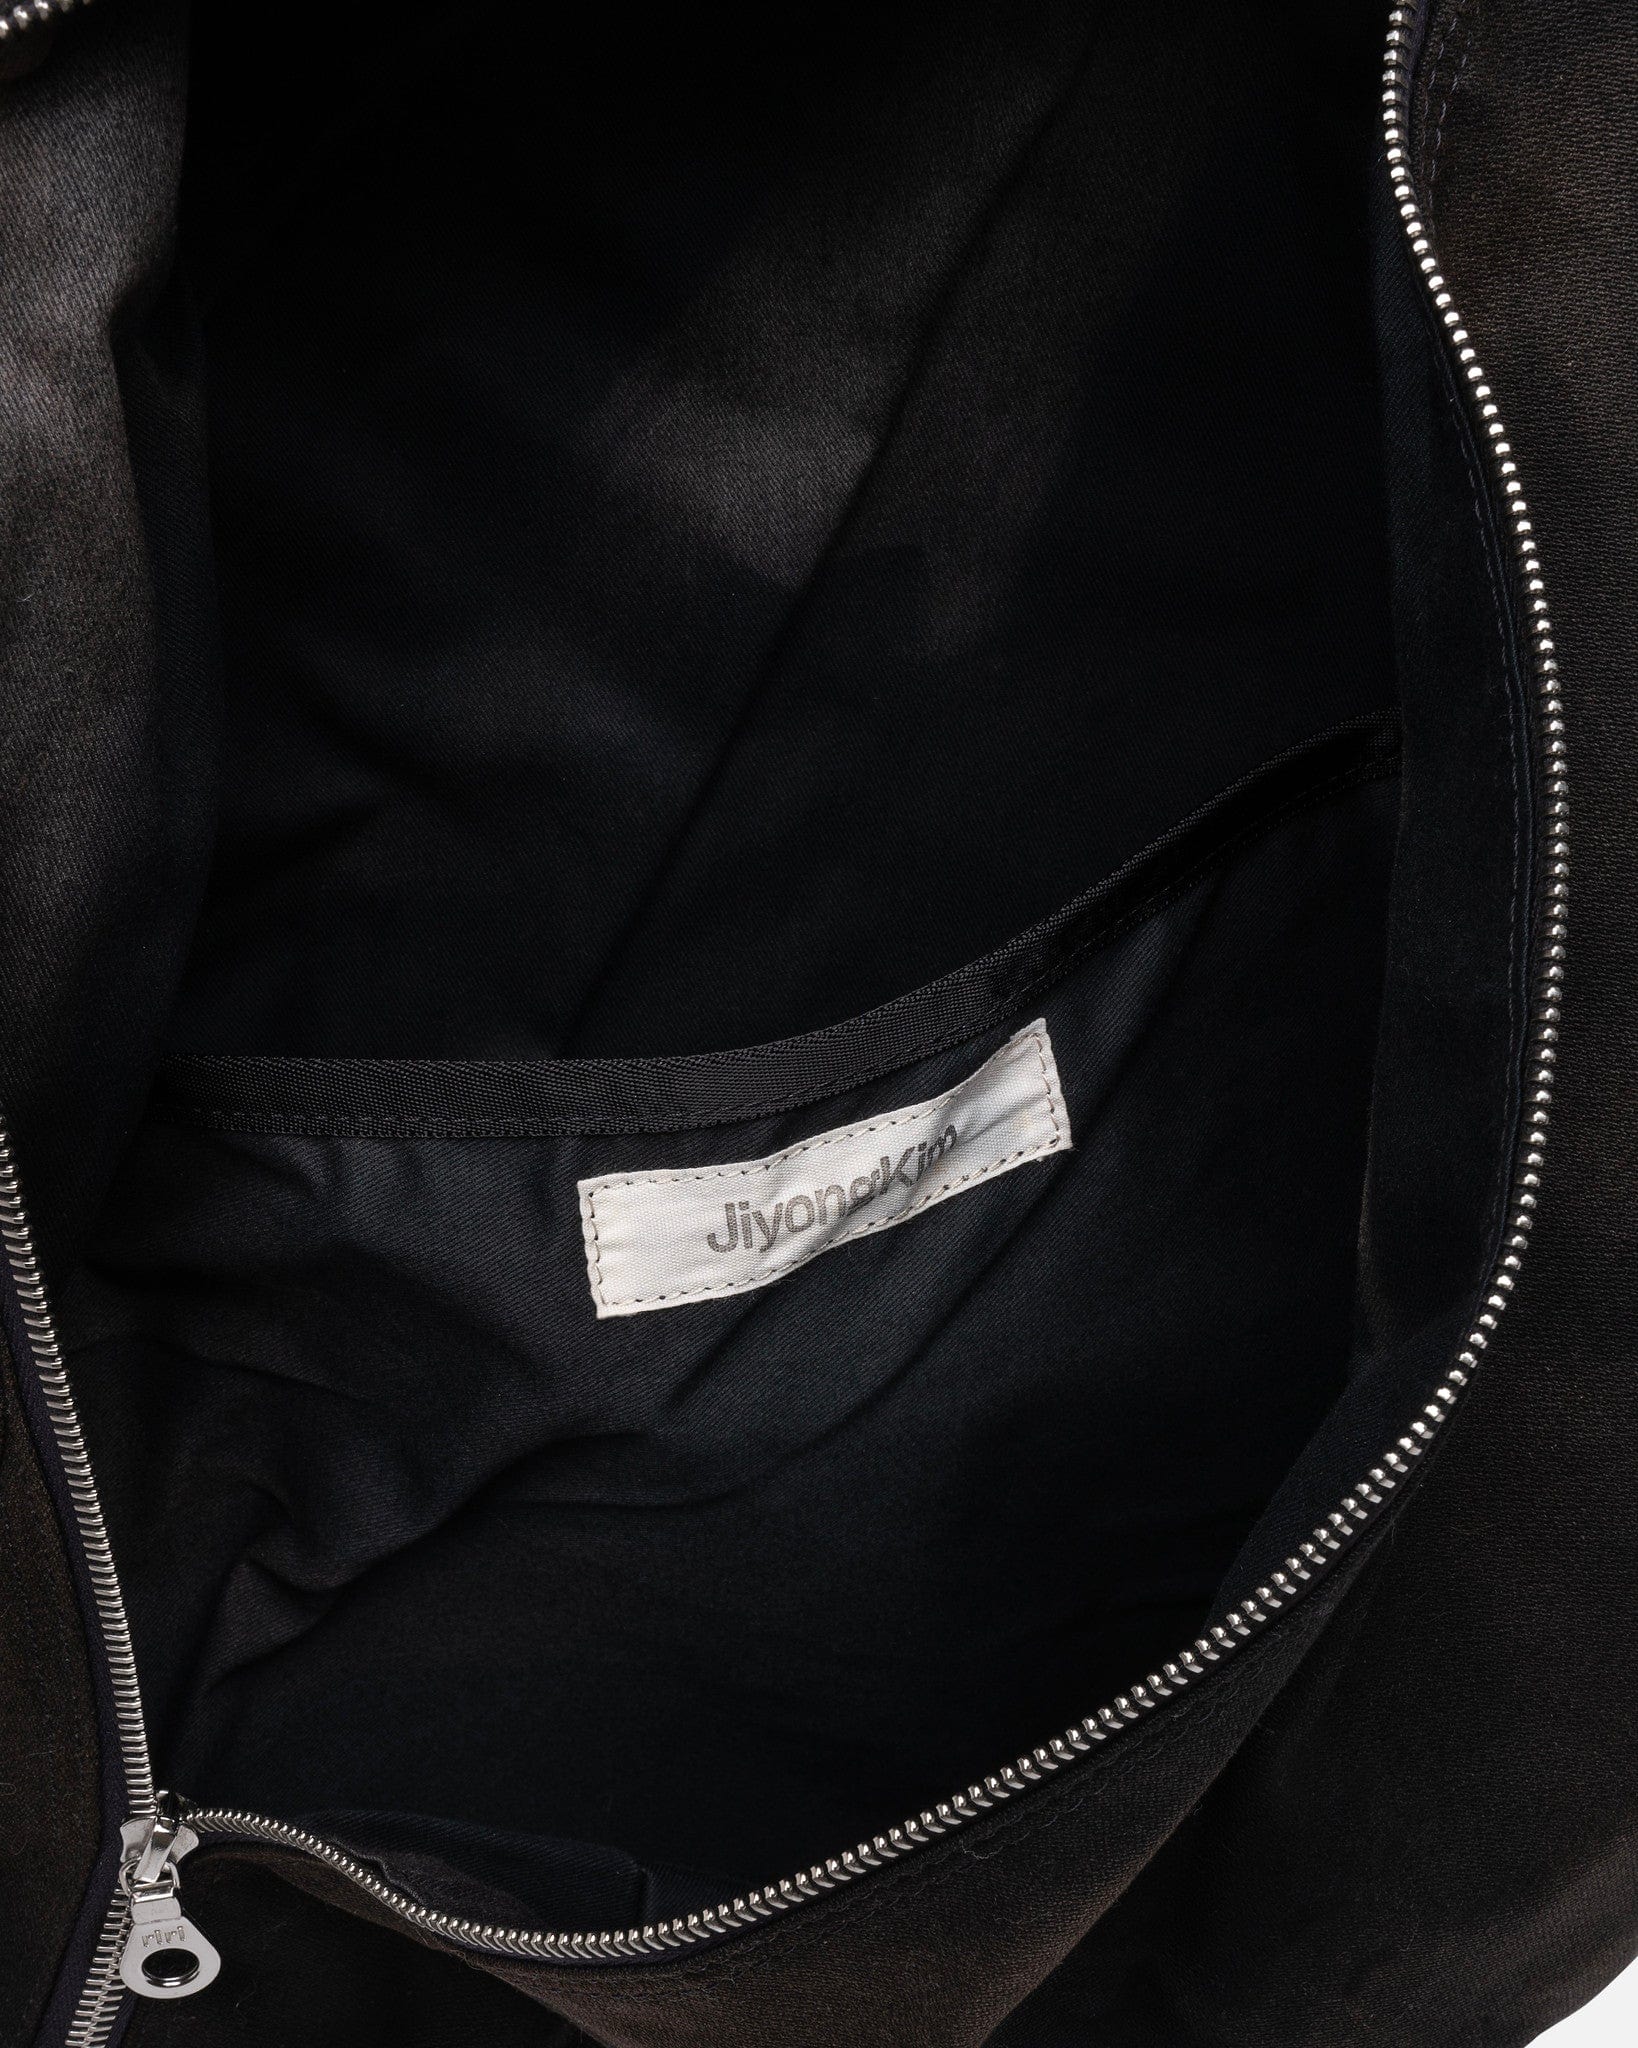 JiyongKim Men's Bags Sun Bleached Sling Bag in Black